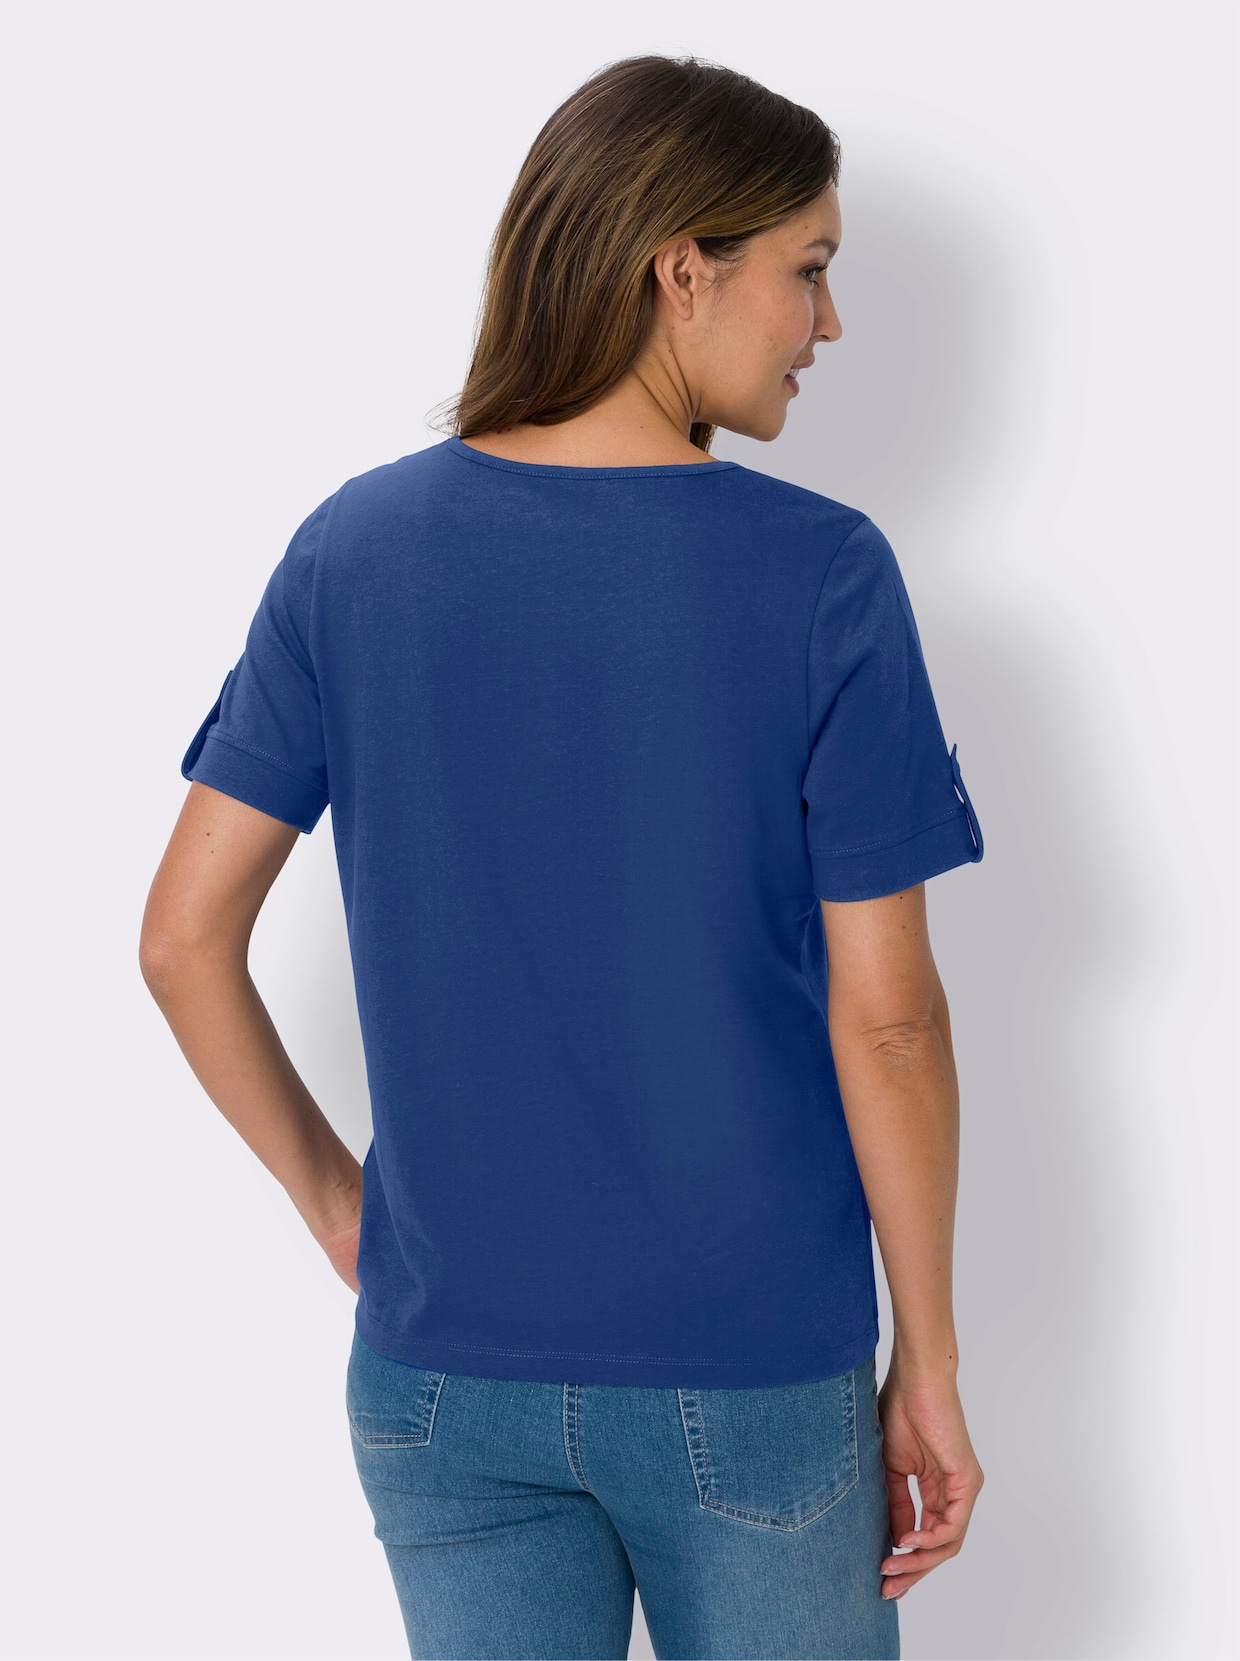 Doppelpack Shirts - royalblau + ecru-royalblau-geringelt